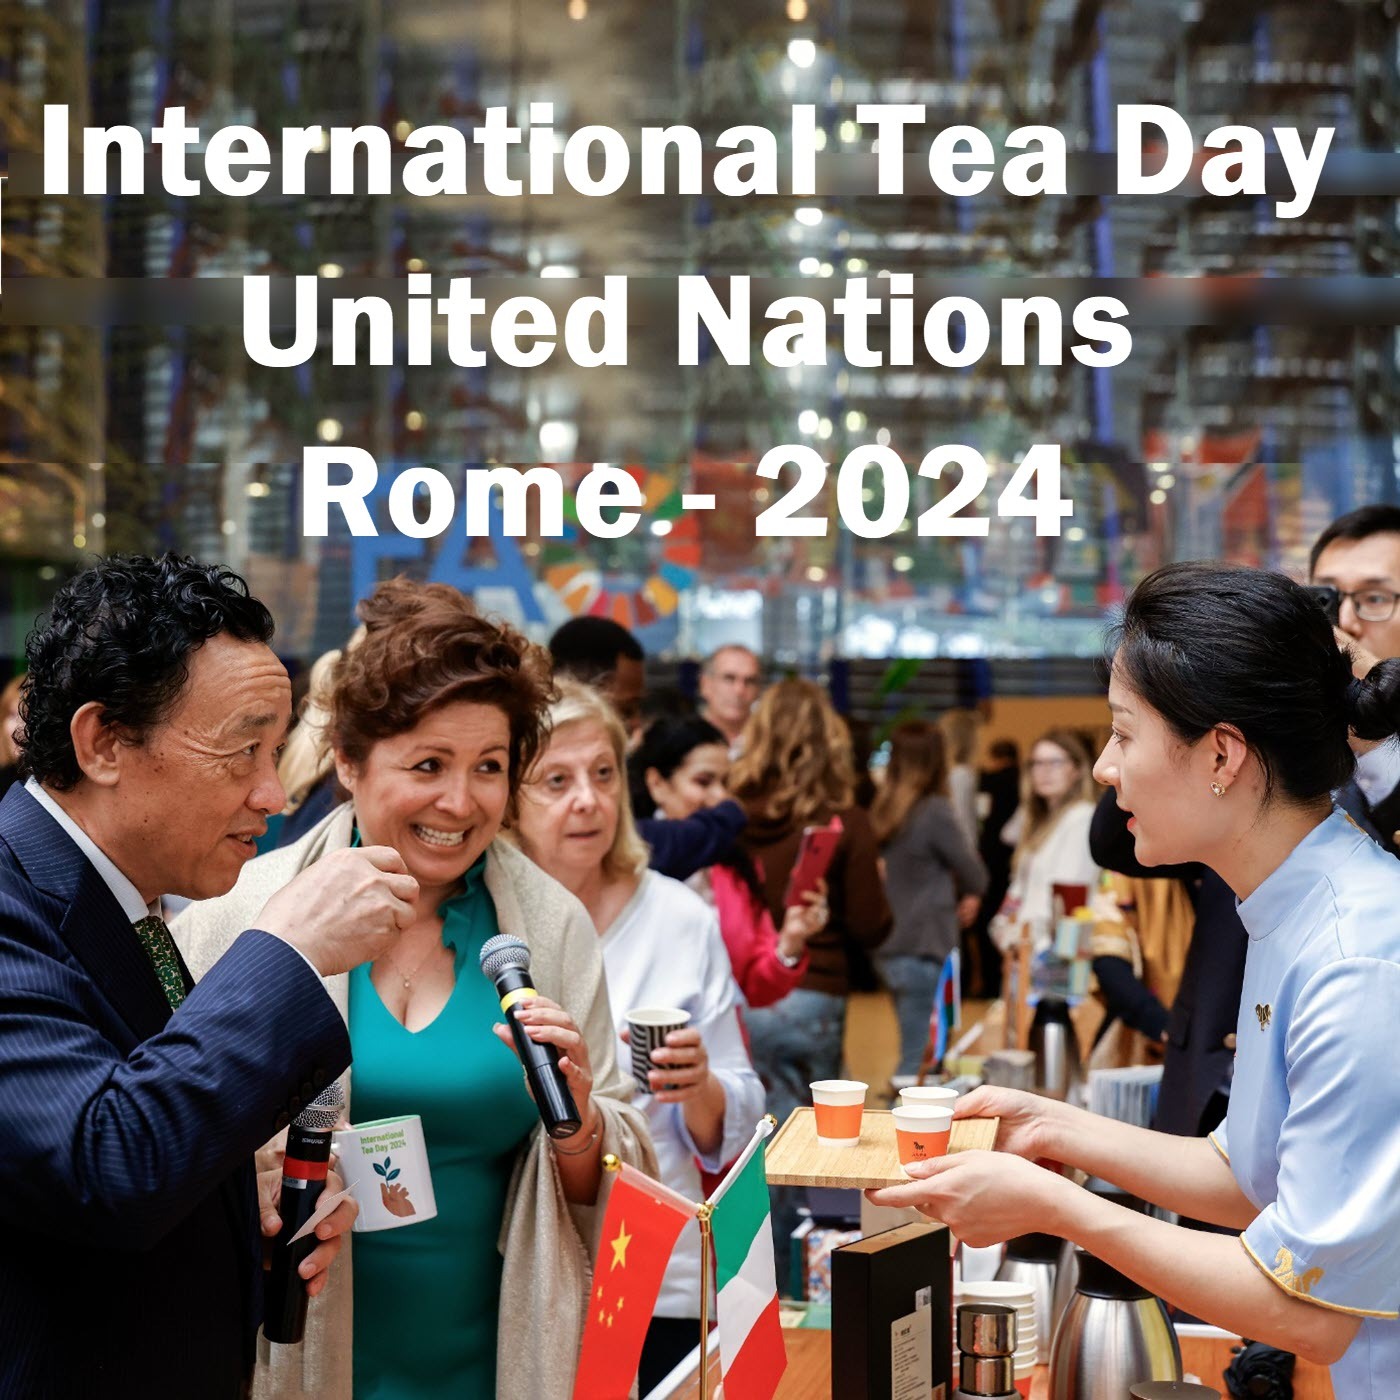 Ep 169 | Global Tea Celebration | The White House Hosts Kenyan President | China Makes Tea Export Marketing Push